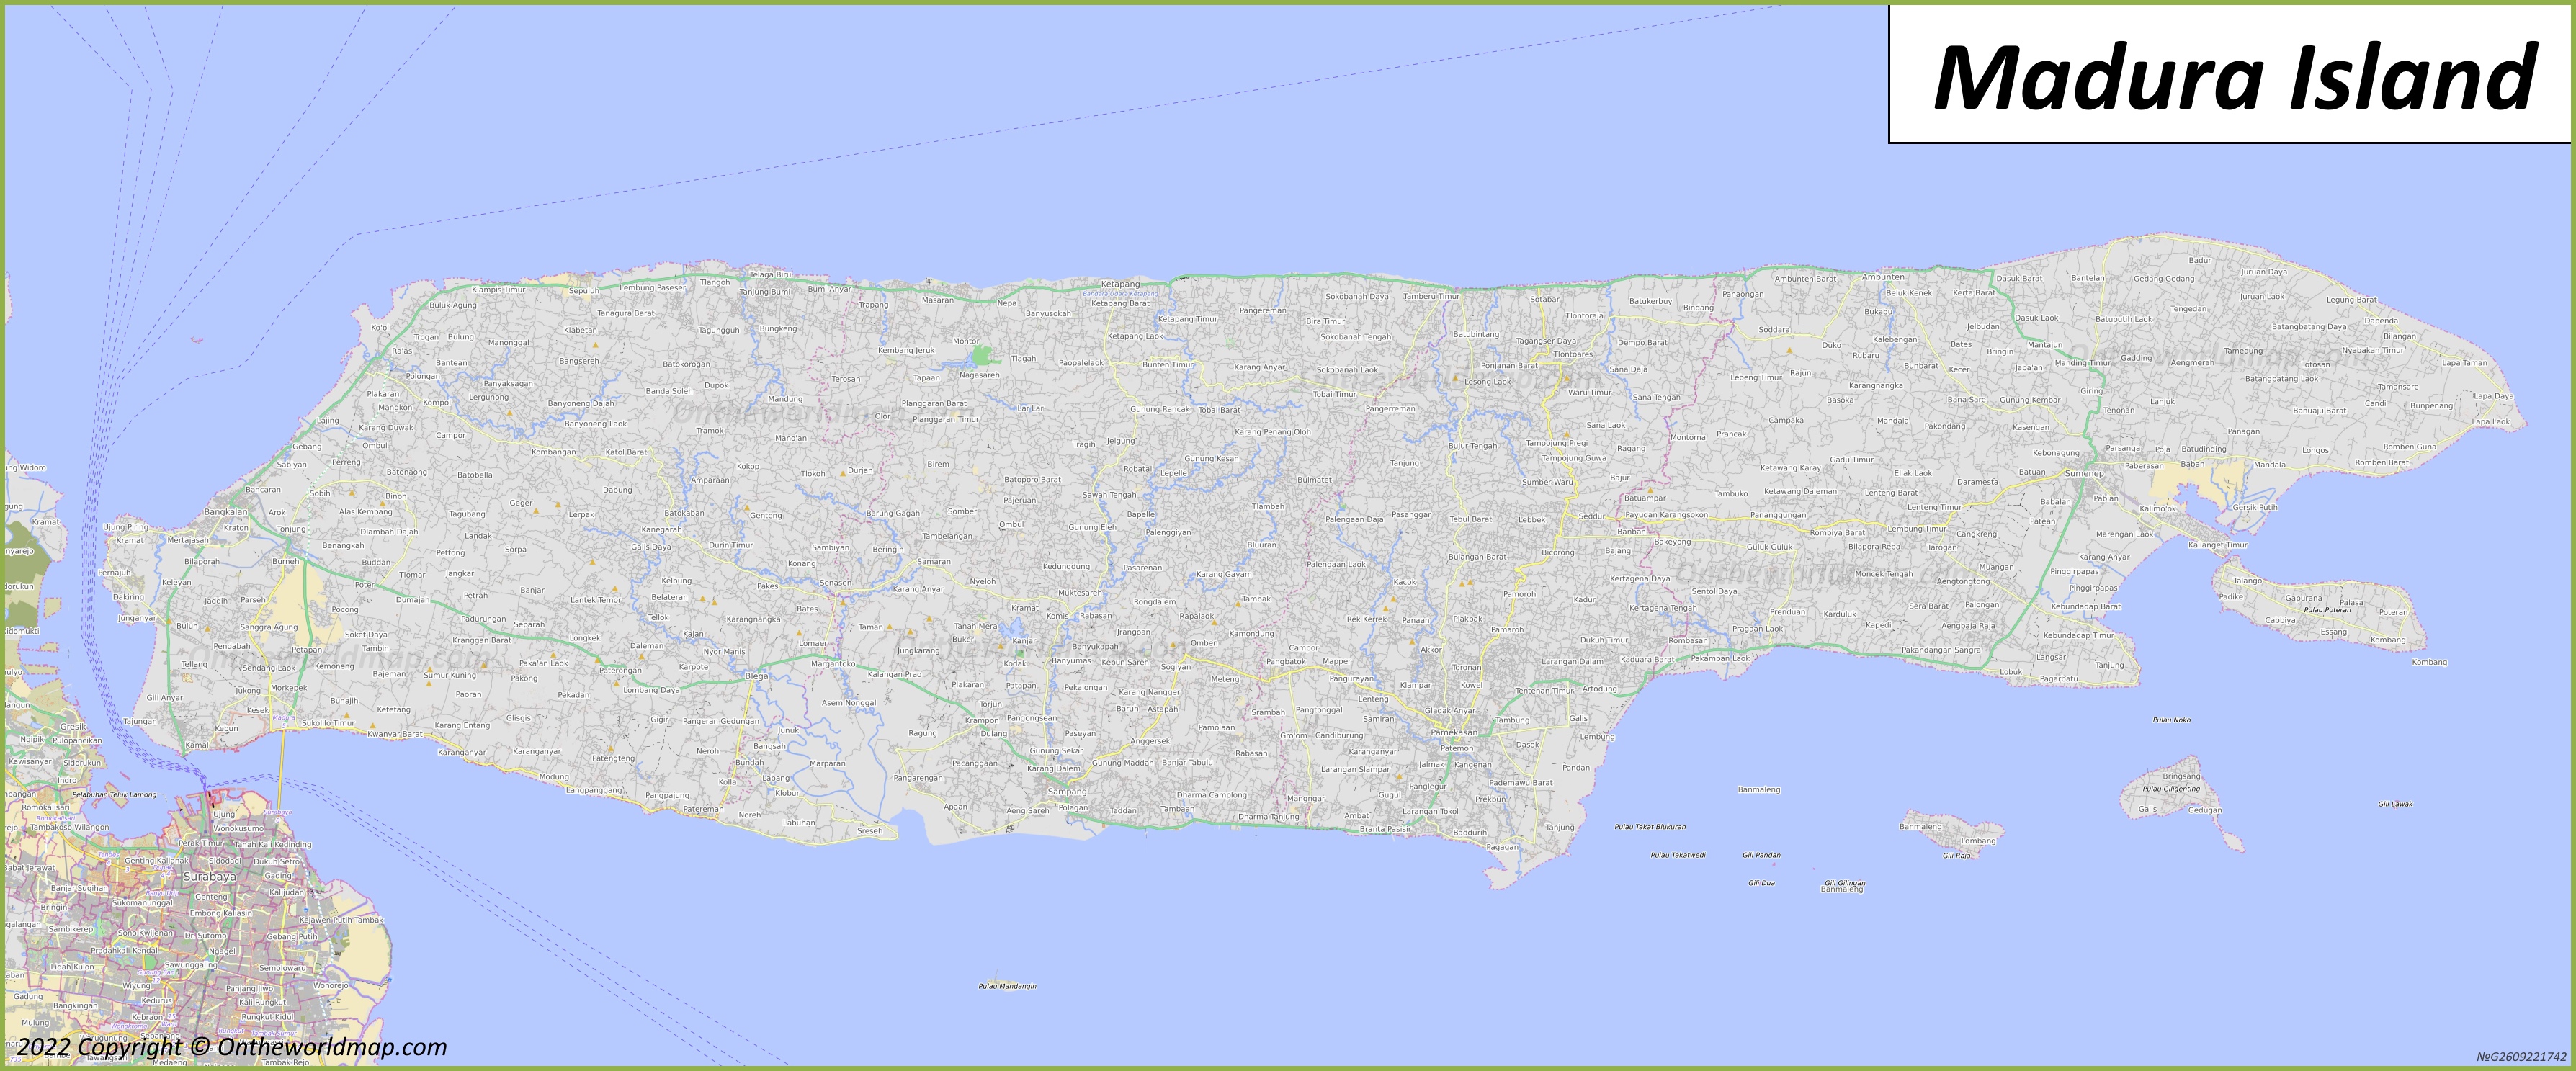 Map of Madura Island